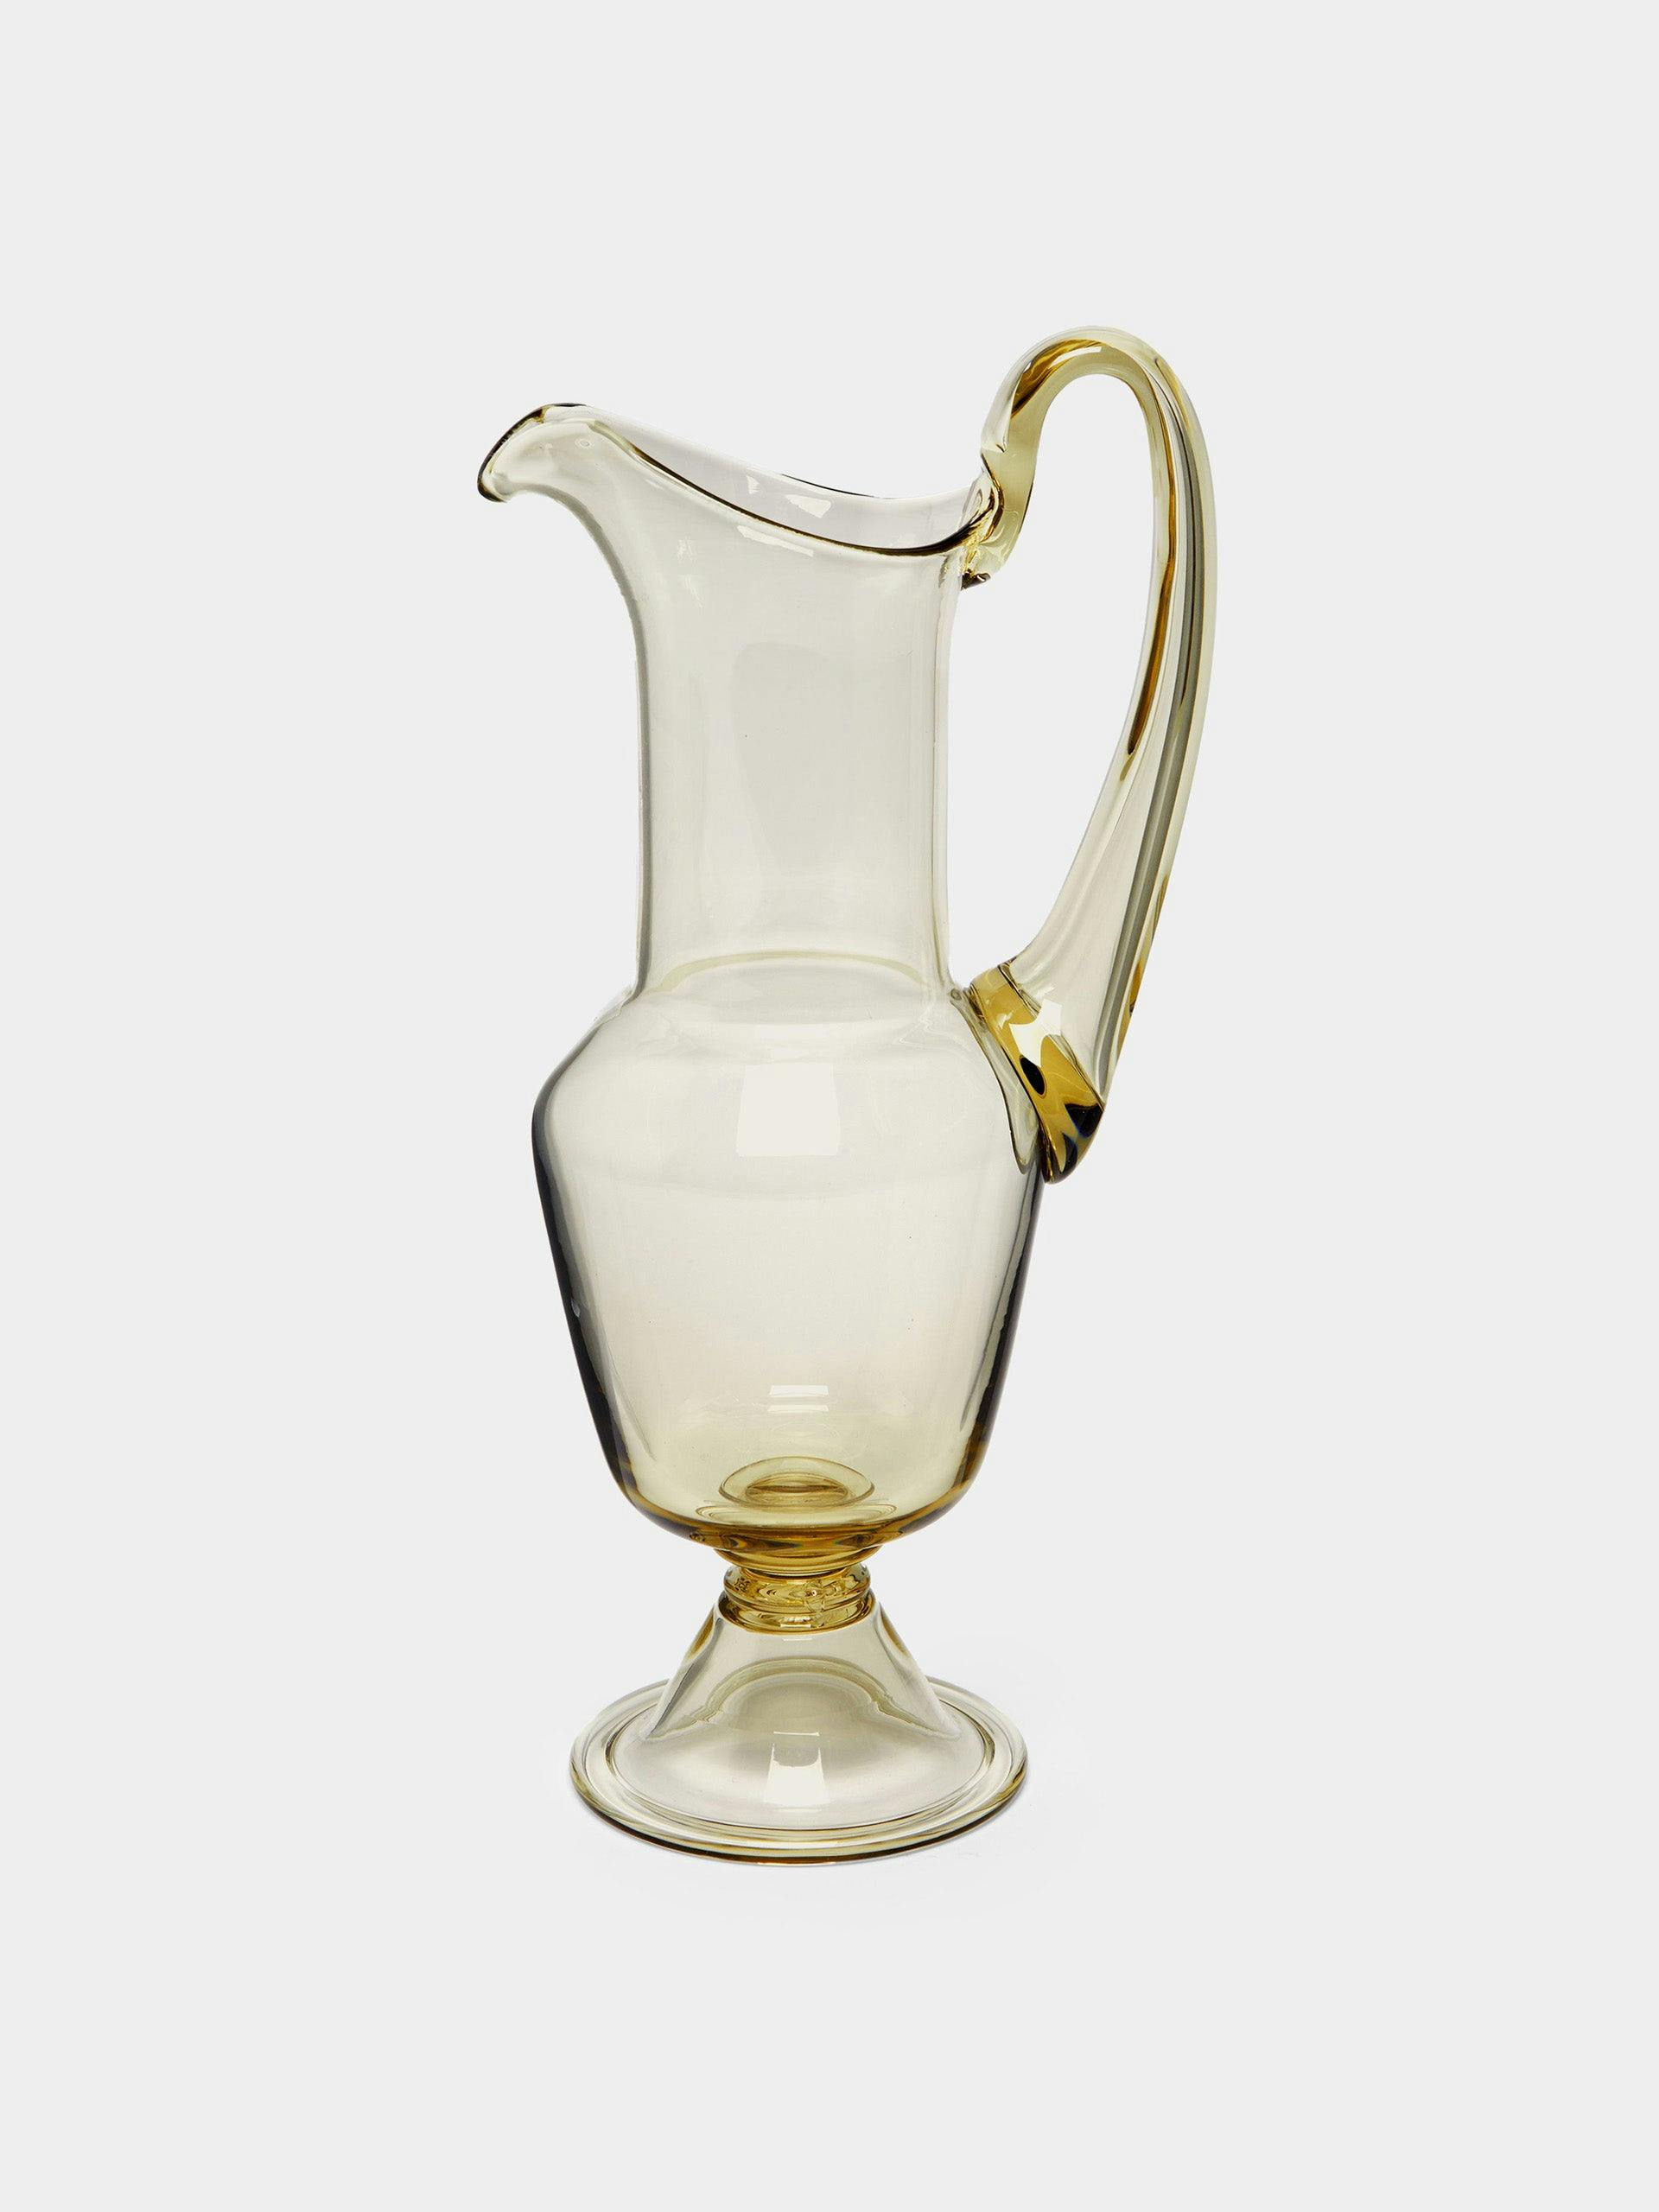 Hand-blown glass jug